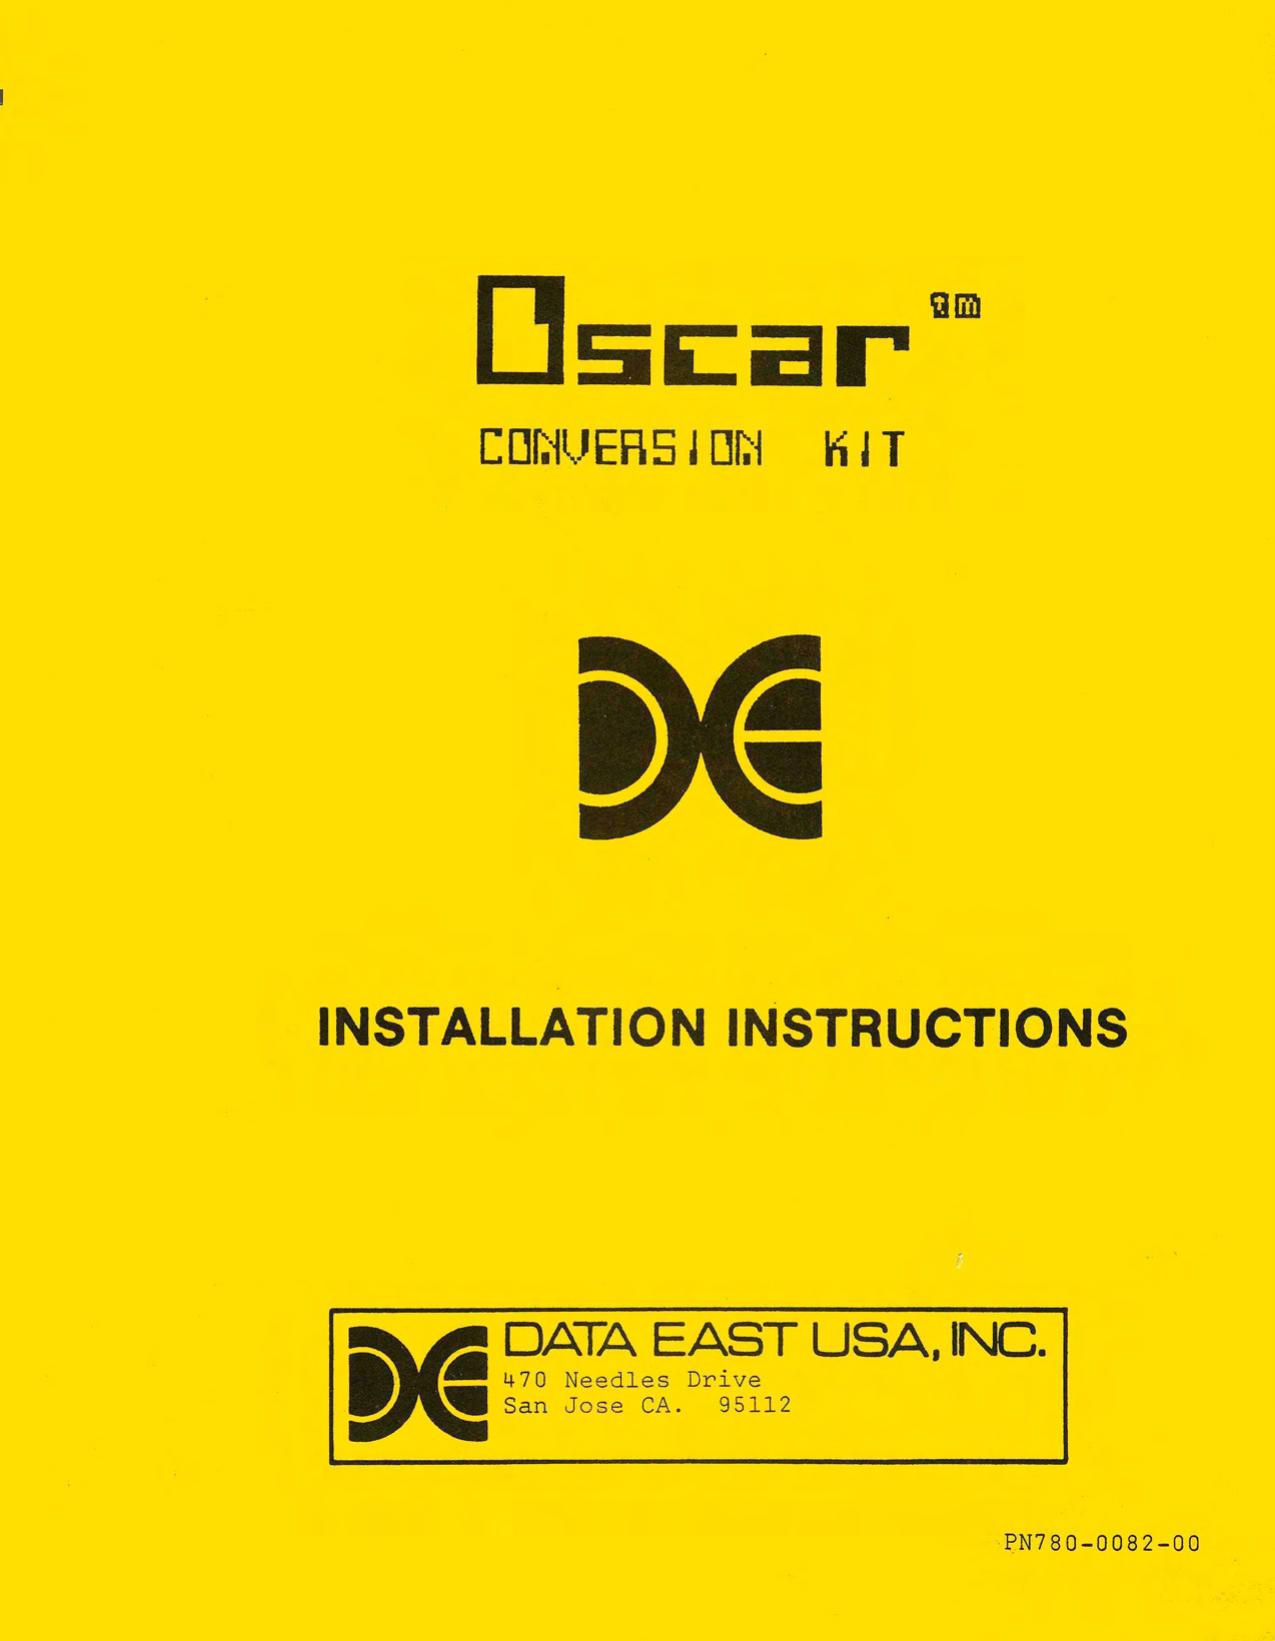 Oscar Conversion Kit Instructions (780-0082-00)